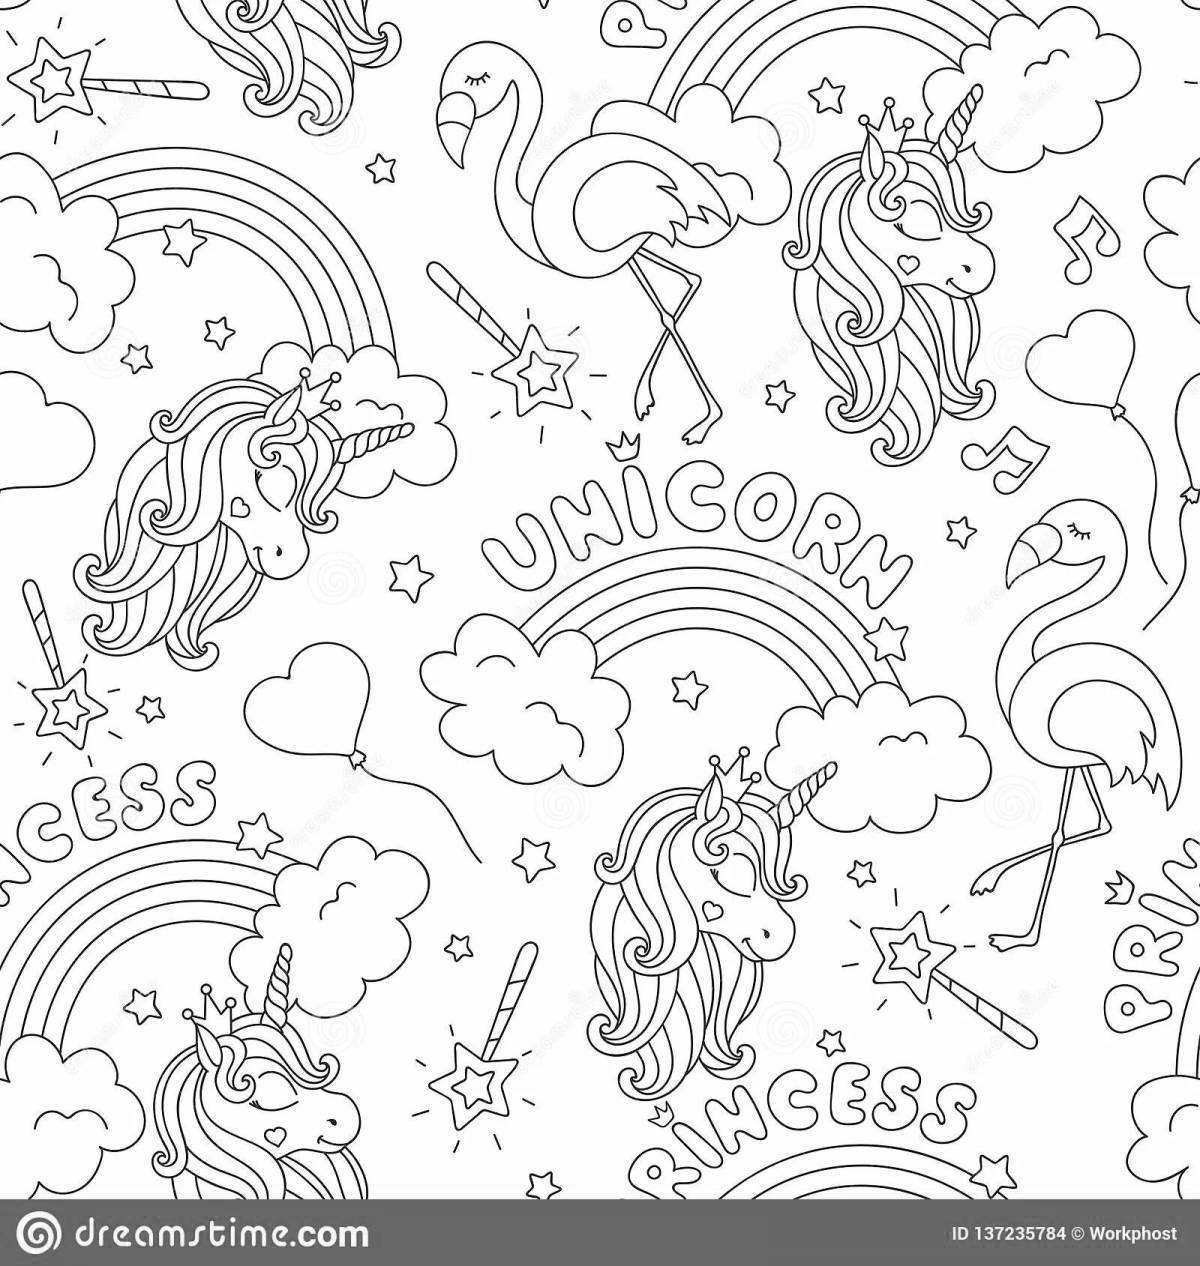 Mystique coloring many unicorns